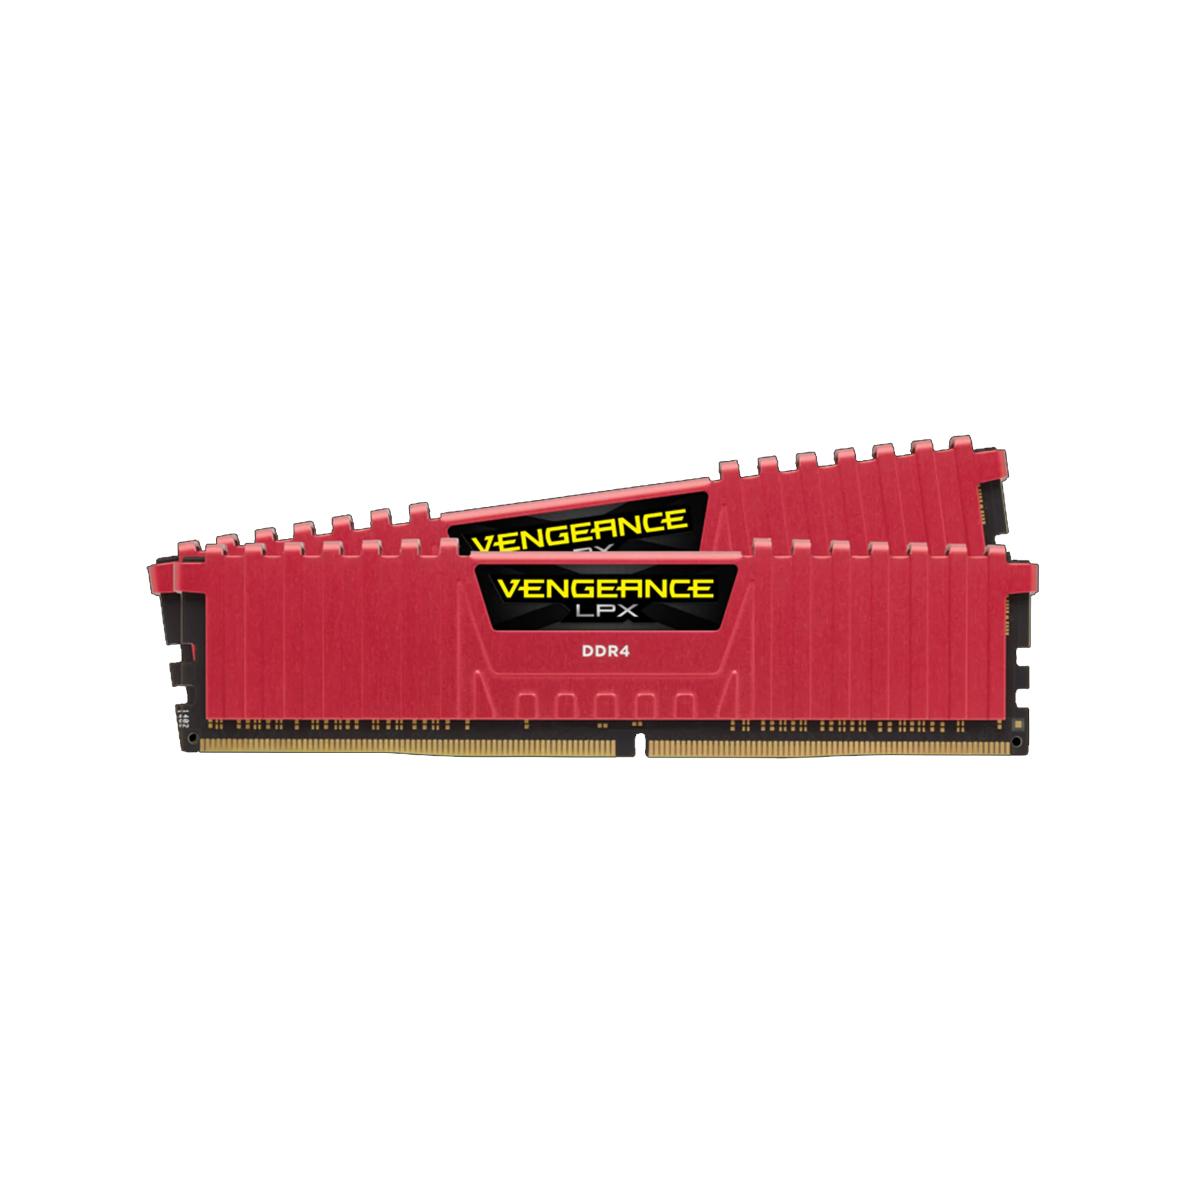 MEMORIA DIMM DDR4 CORSAIR (CMK16GX4M2A2666C16R) 16GB 2666MHZ (2X8GB) VENGEANCE LPX, ROJO - CMK16GX4M2A2666C16R